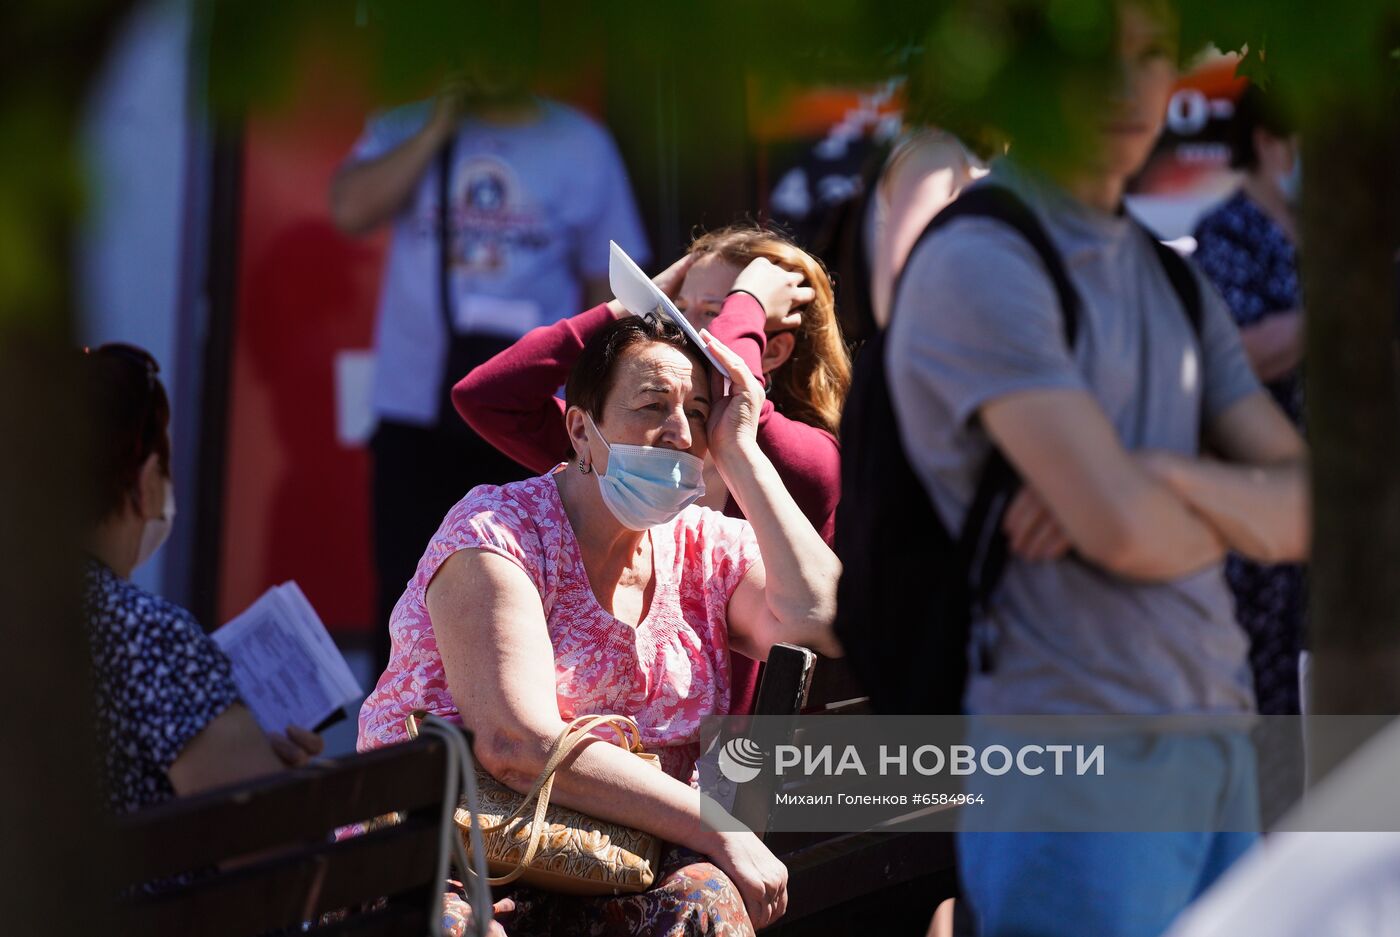 Очереди на вакцинацию против коронавируса в Калининграде